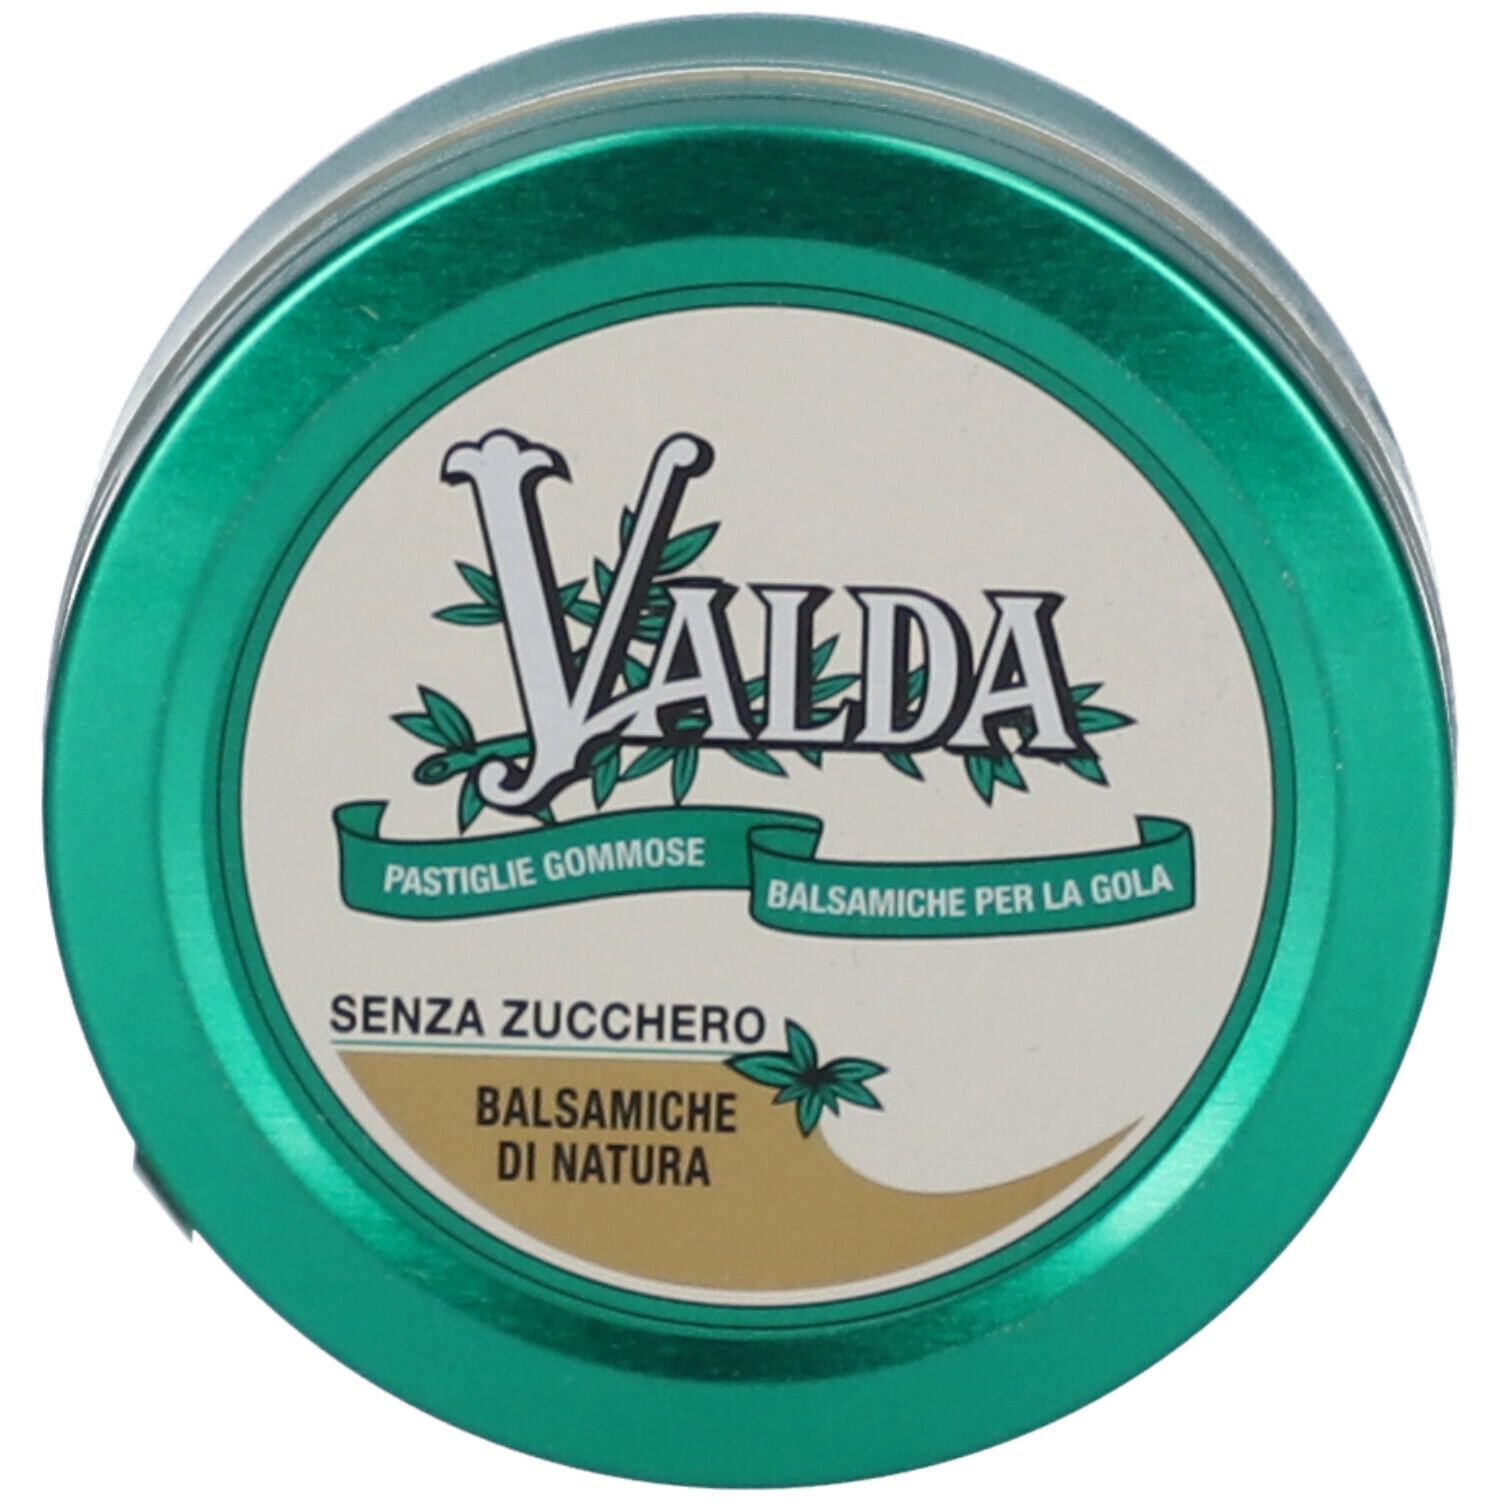 Perrigo Italia Srl Valda® Classiche s/zucchero 50 g Caramelle